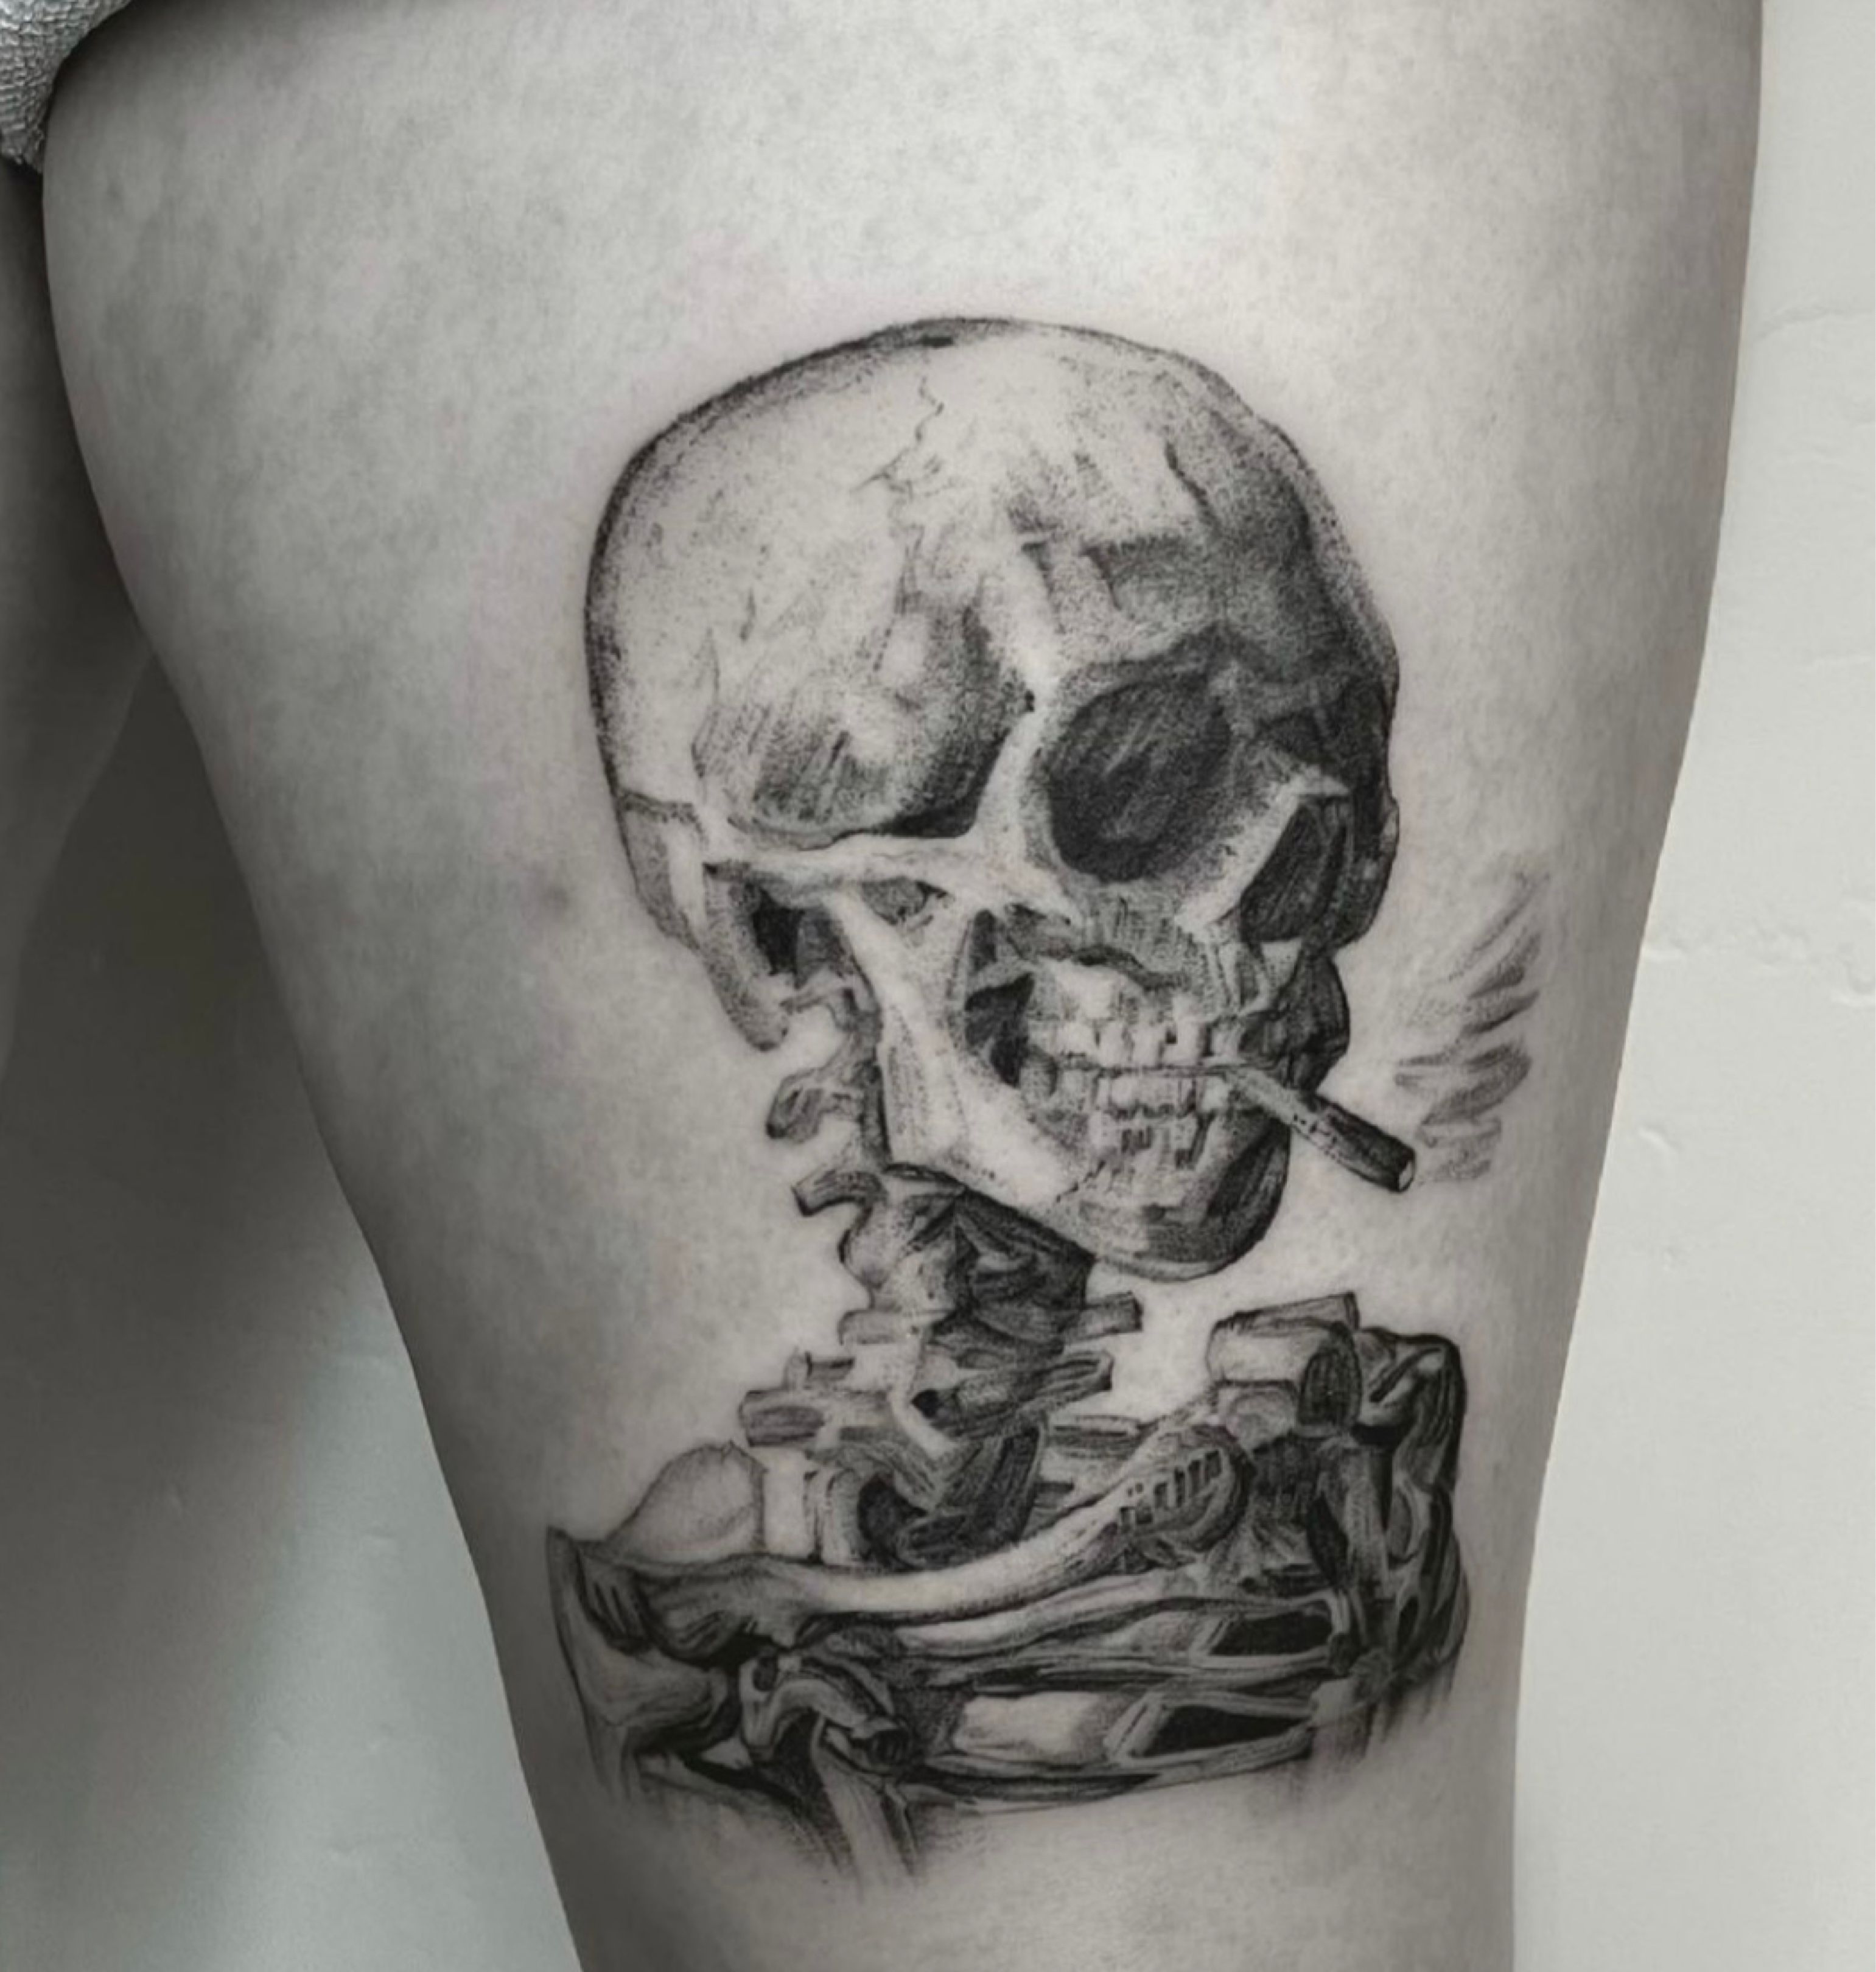 Van gogh skull with cigarette tattoo